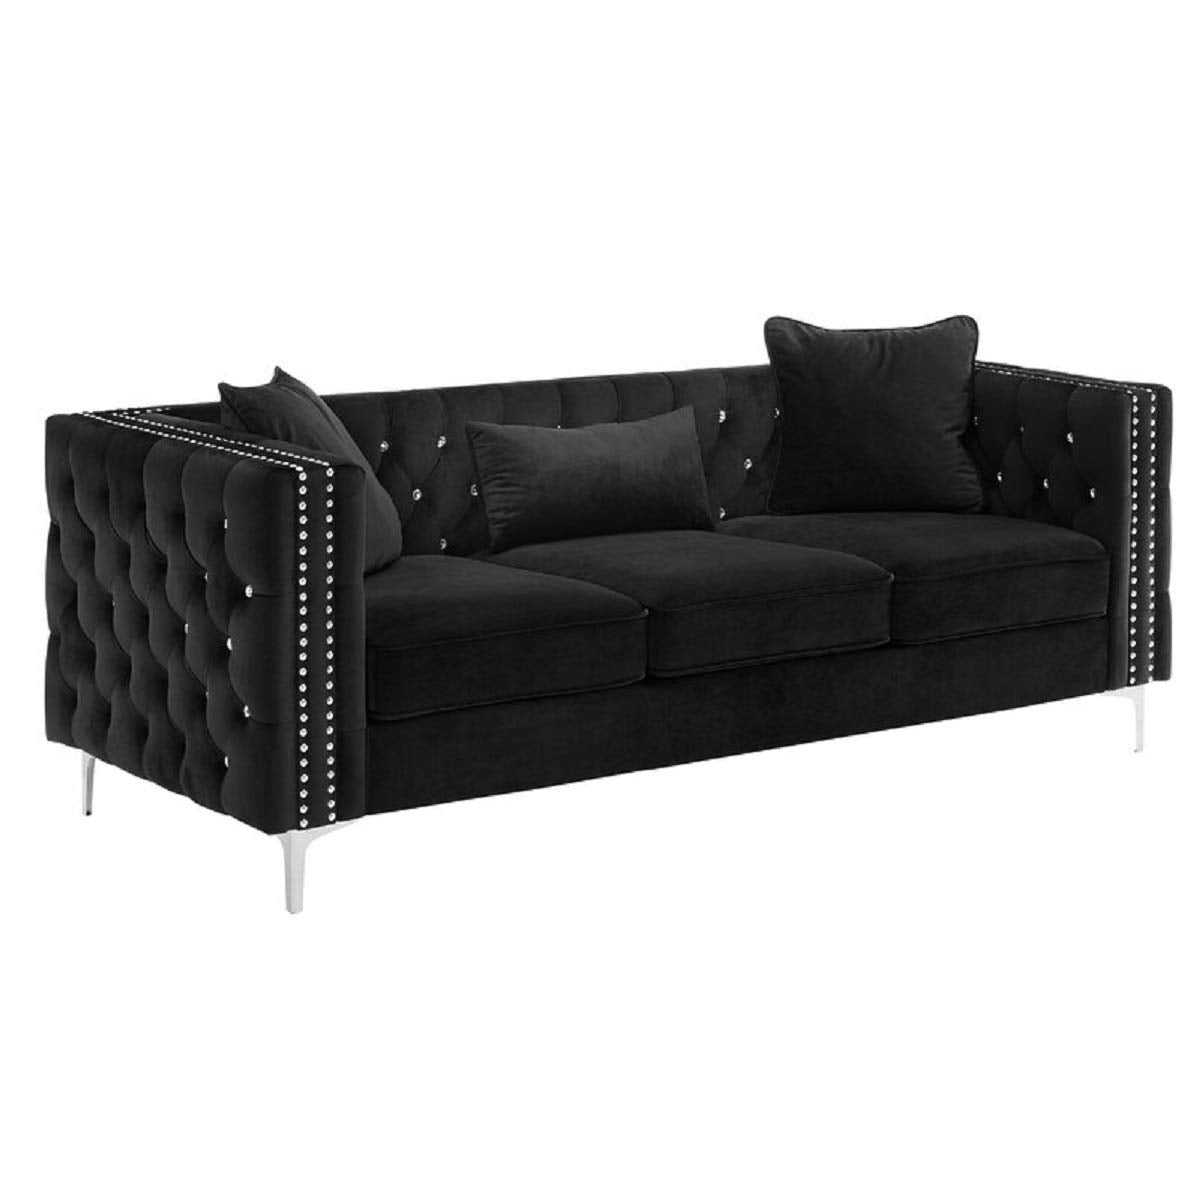 Designer Sofa Set:- 3 Seater Chesterfield Velvet Fabric Luxury Furnitu ...